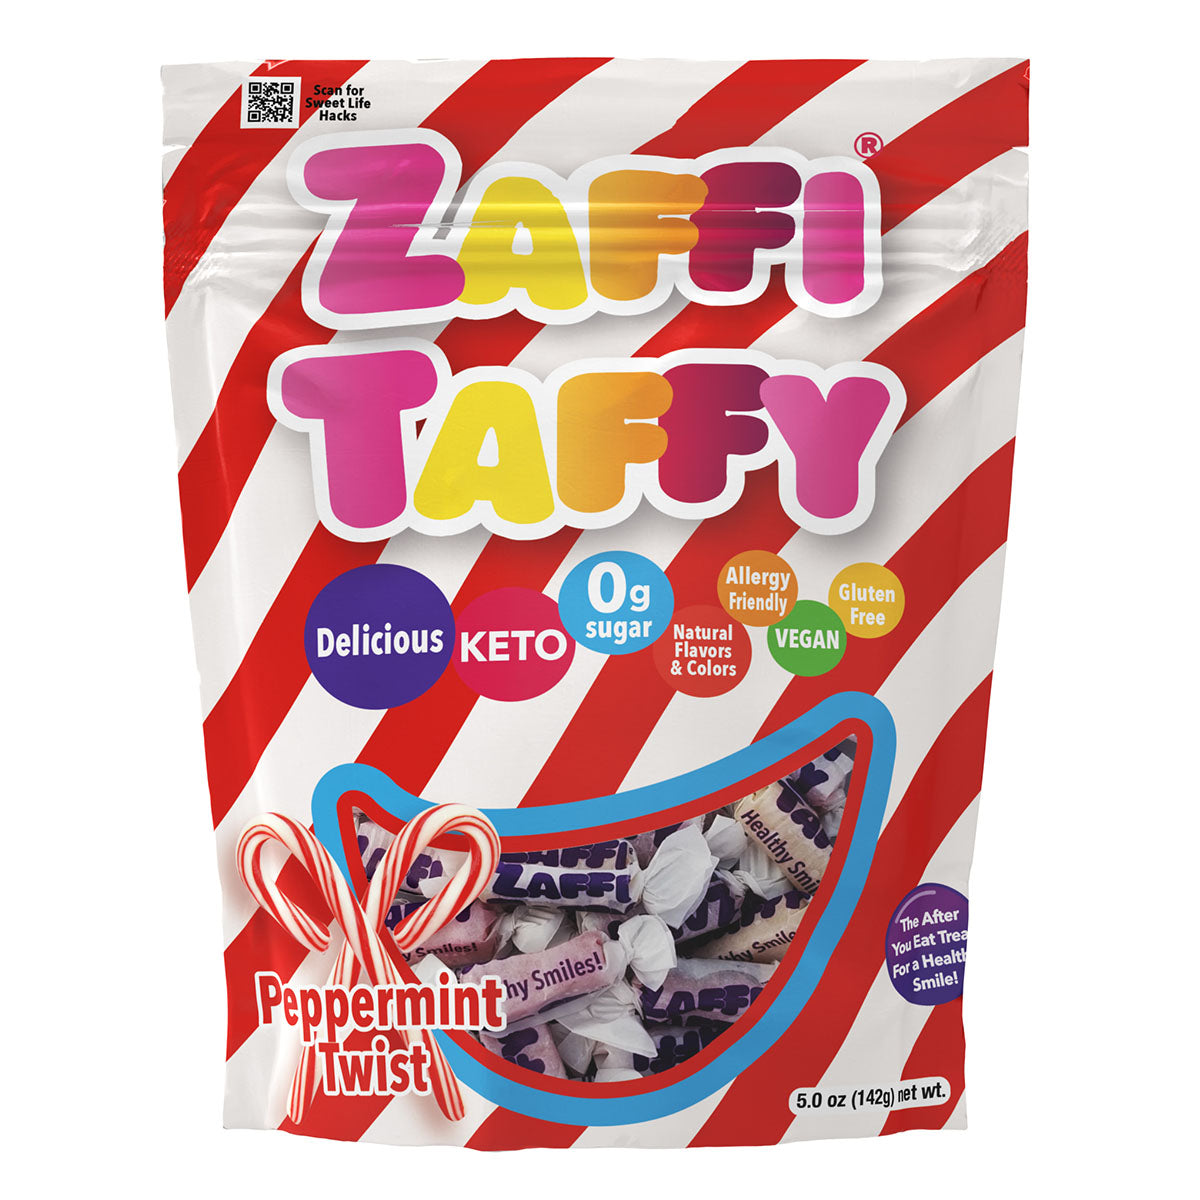 Zolli Sugar-Free Zaffi Taffy Flavor Bundle